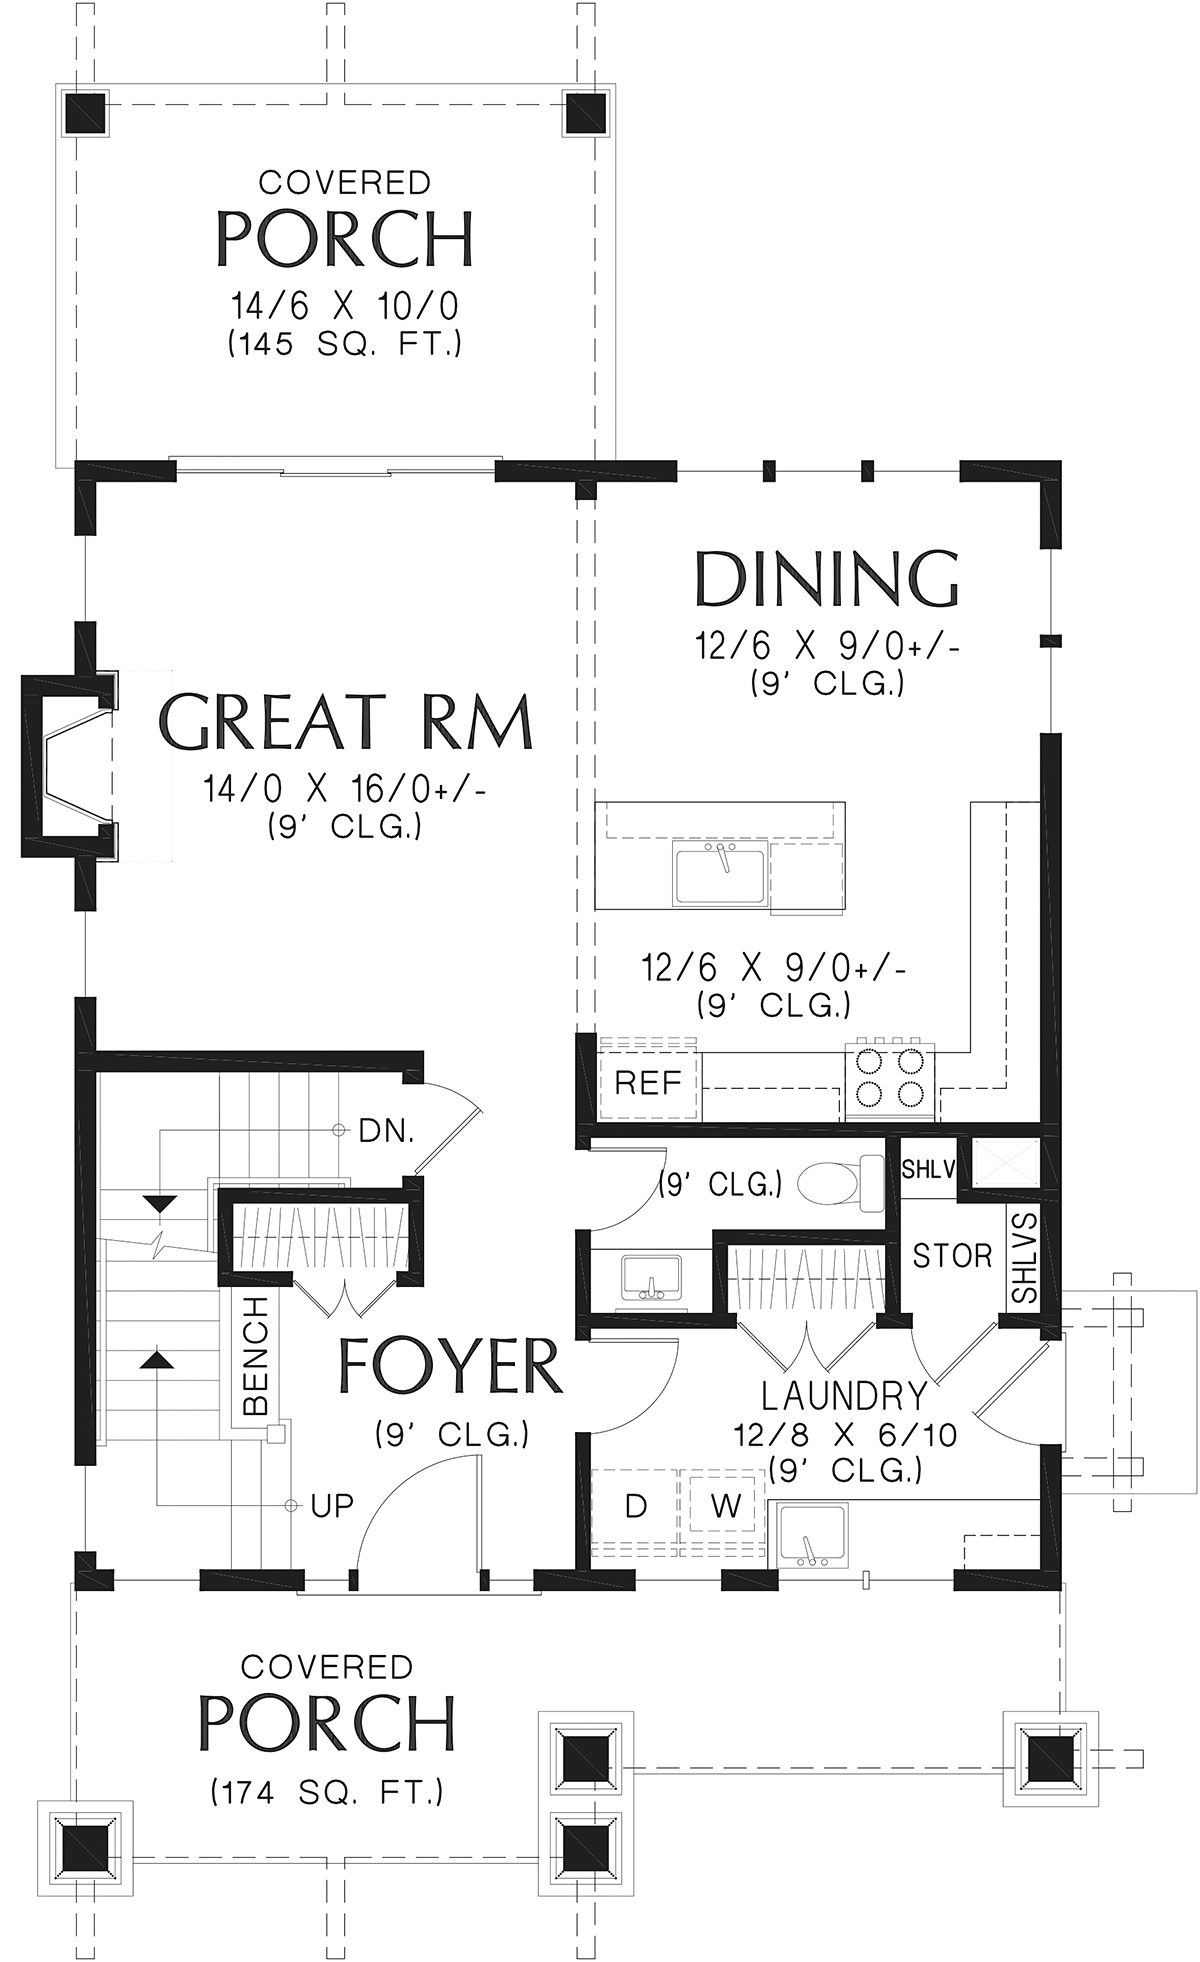 House Plan 81392 Alternate Level One